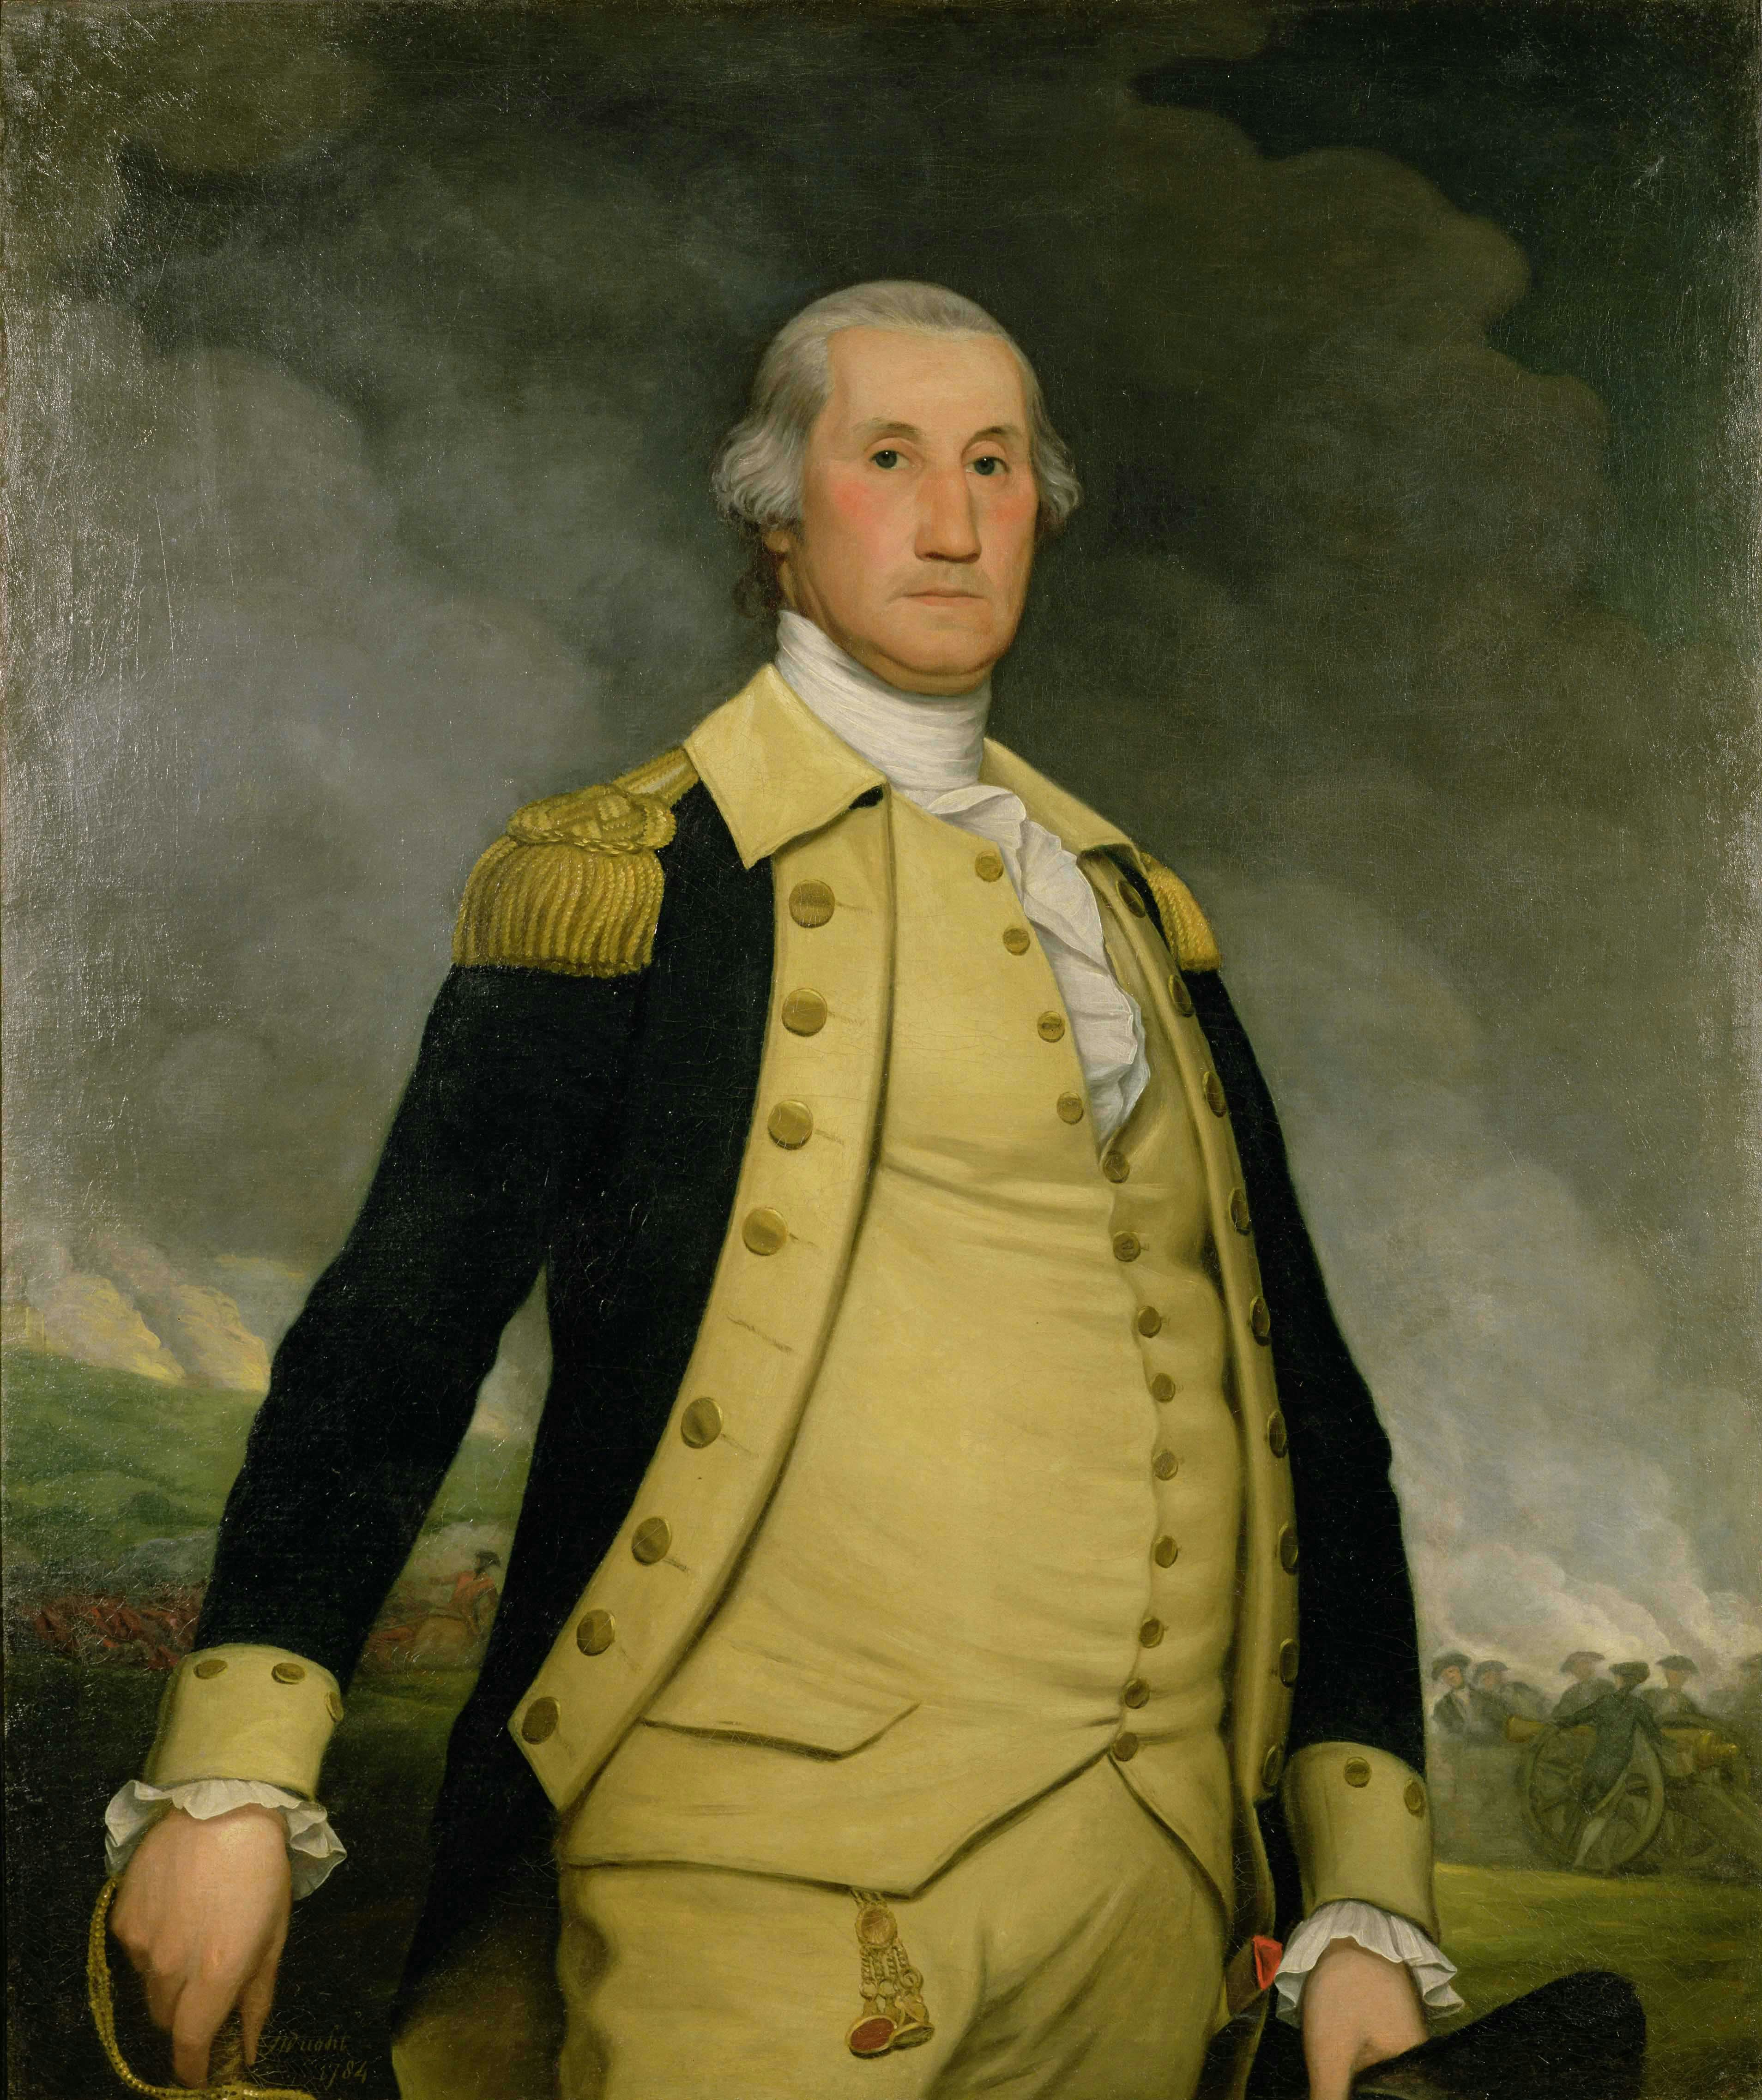 Joseph Wright’s Portrait of George Washington